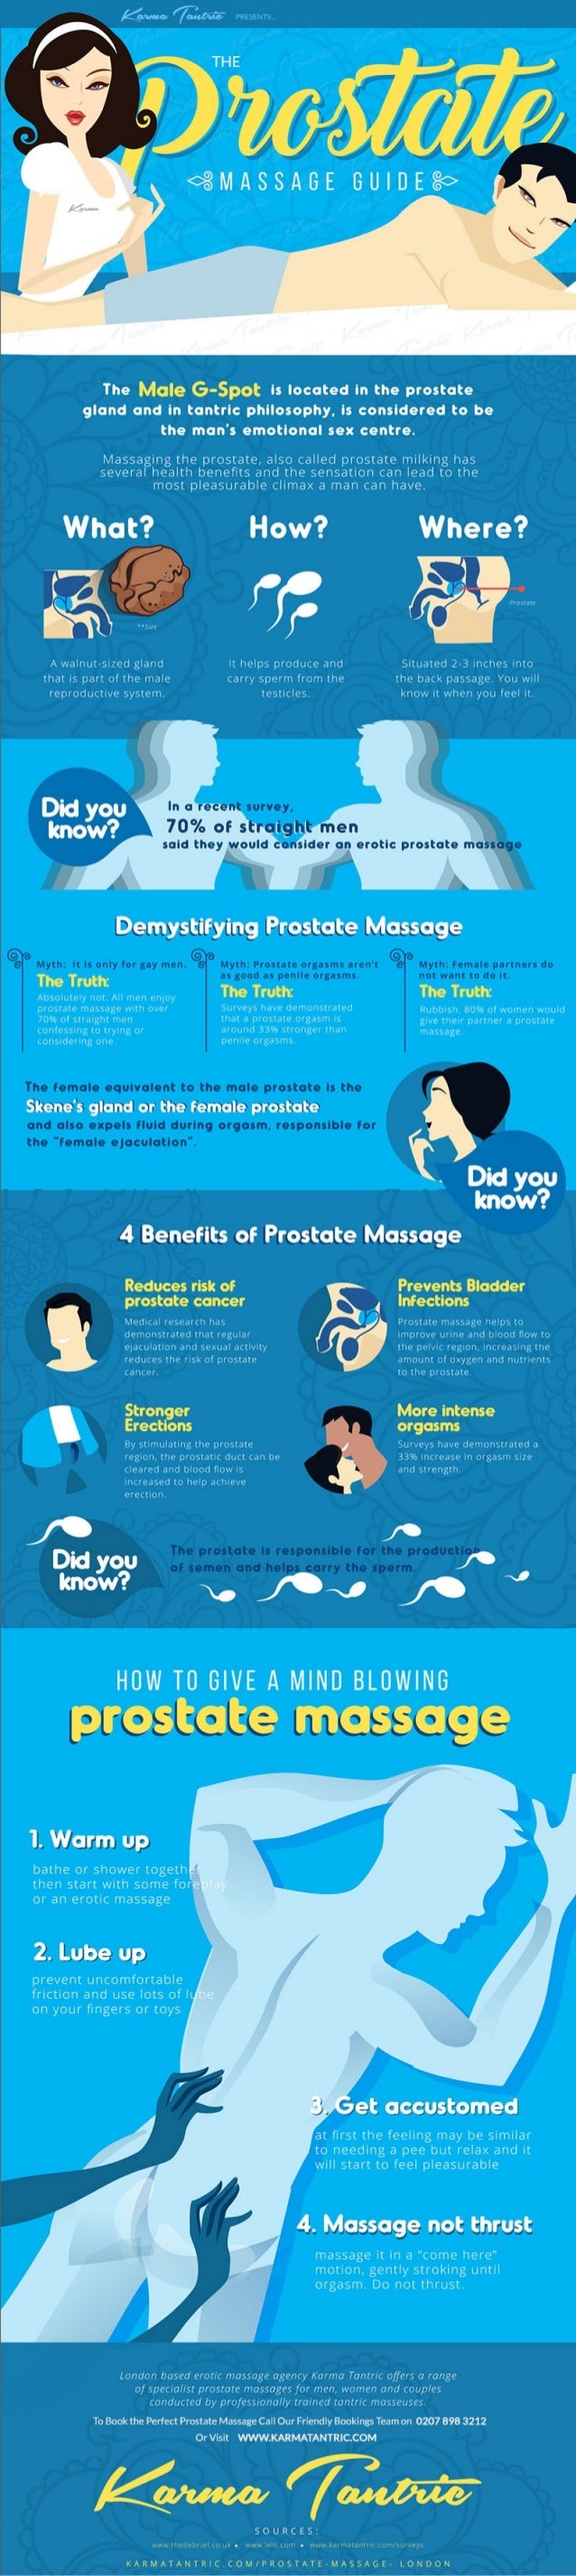 prostate massage 01